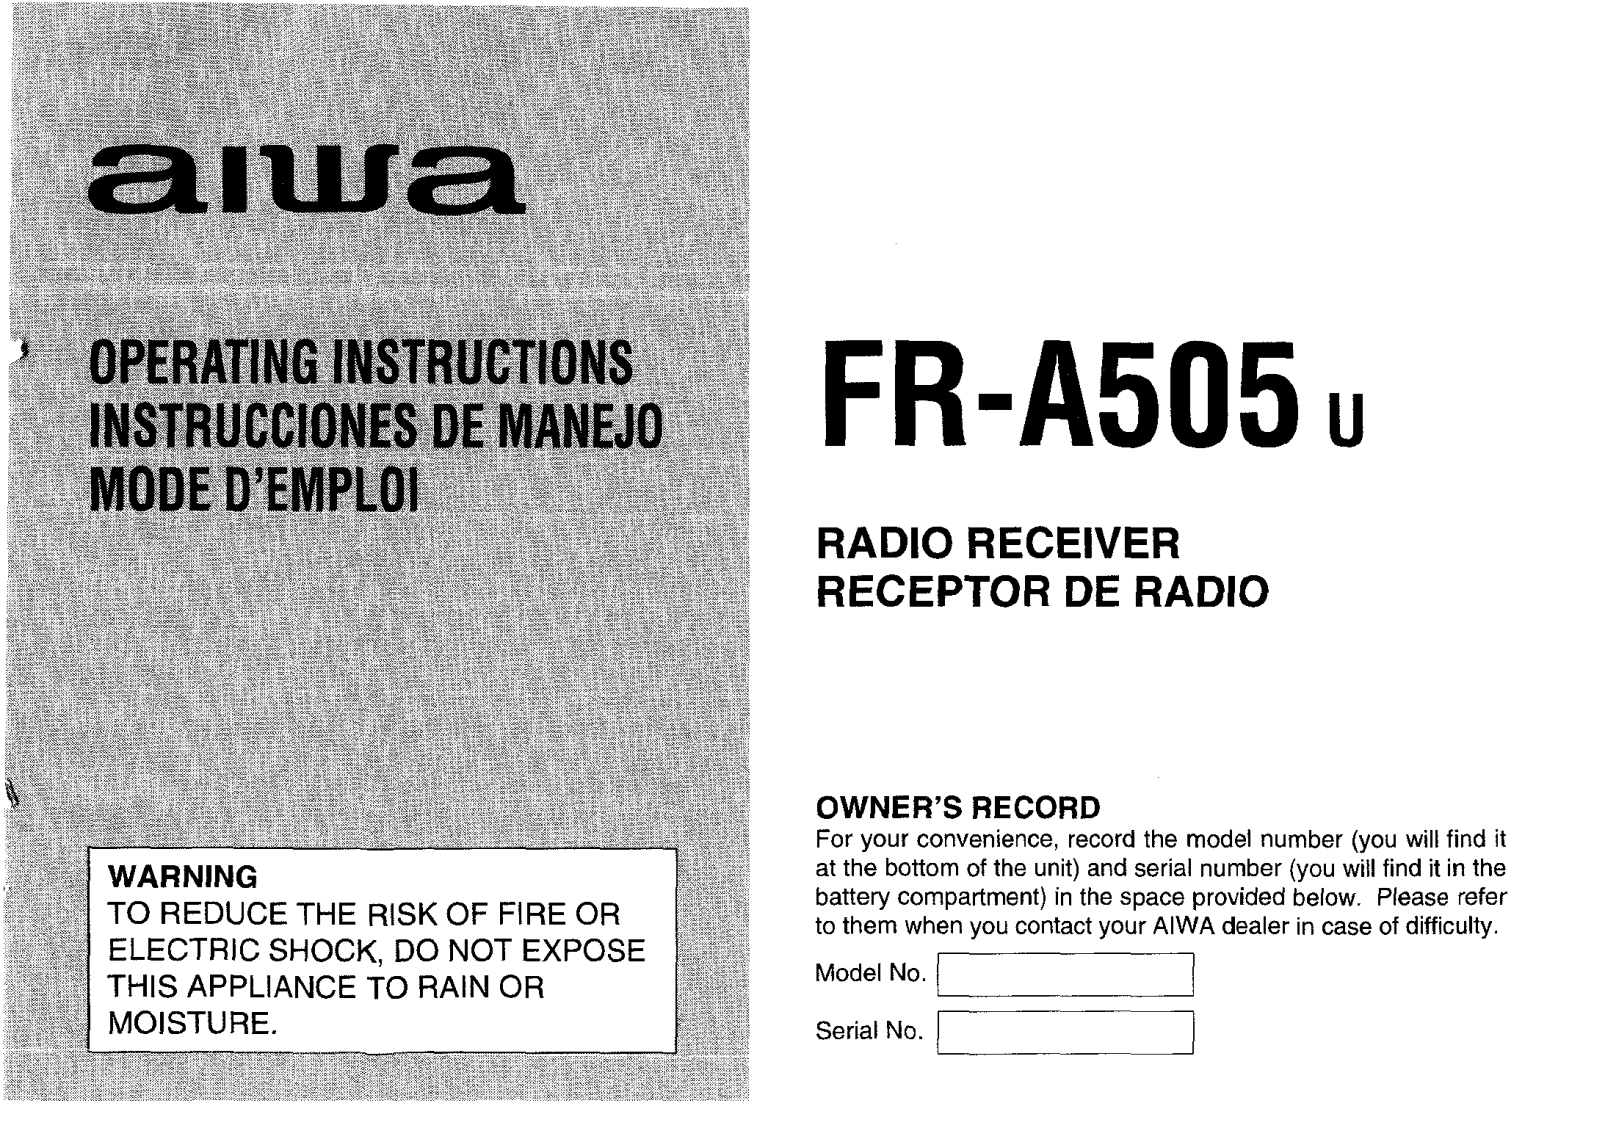 Sony FRA505 Operating Manual